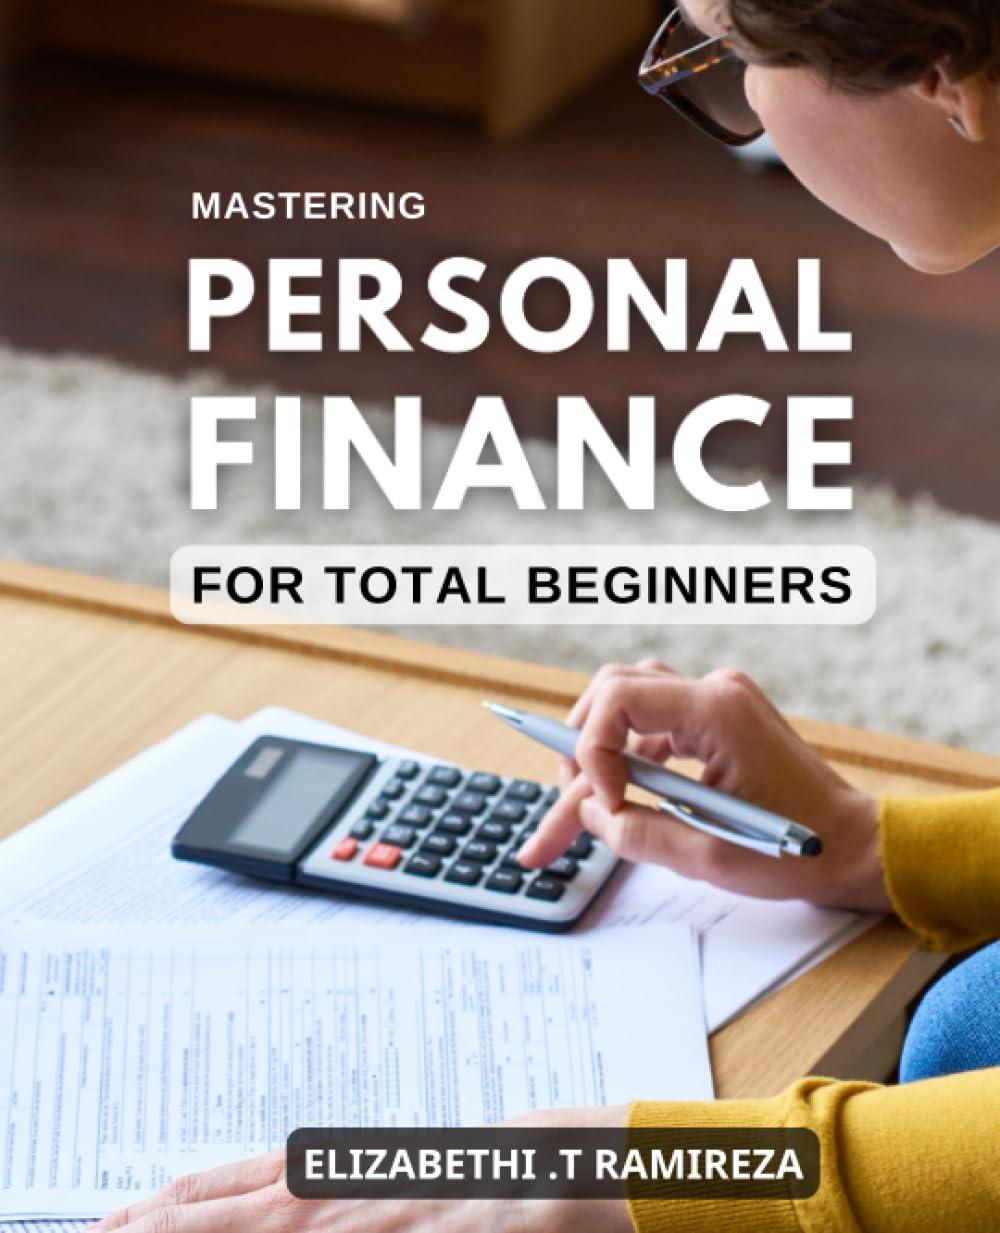 mastering personal finance for total beginners 1st edition elizabethi .t ramireza b0c7jd61xb, 979-8398030891